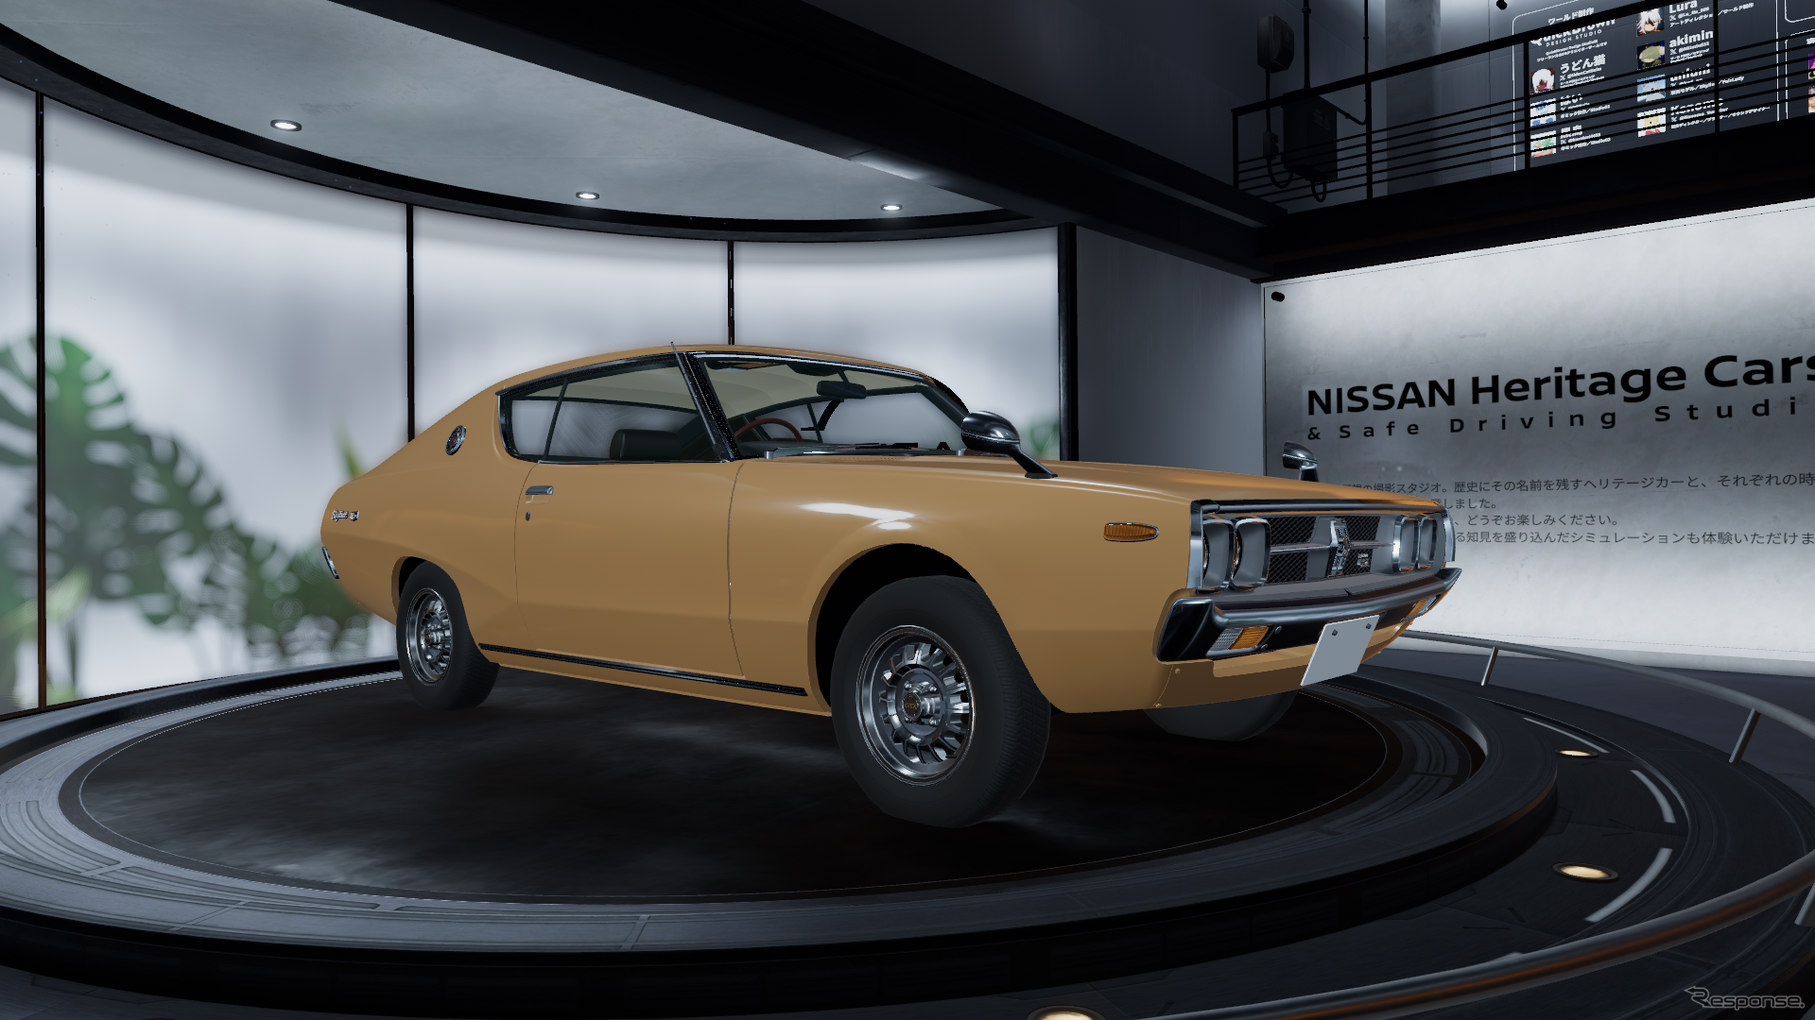 「NISSAN Heritage Cars＆Safe Driving Studio」の入口に置かれたスカイライン2000GTX-E。